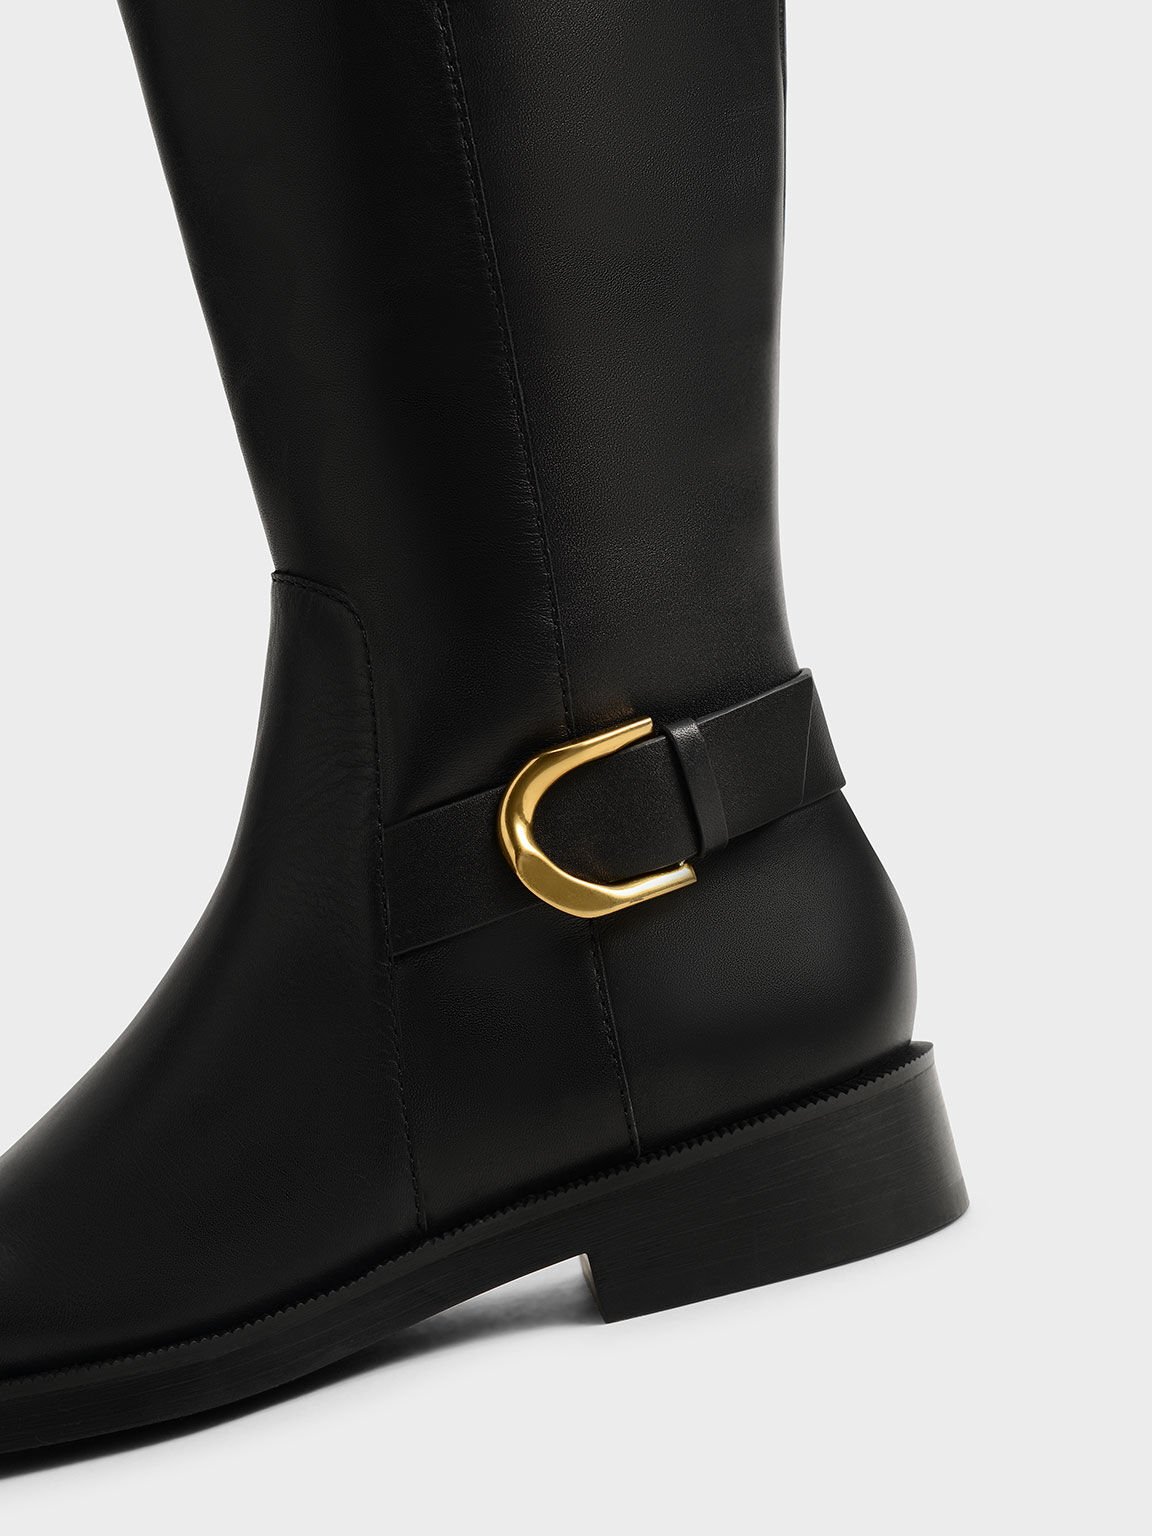 Gabine Buckled Leather Knee-High Boots, Black, hi-res